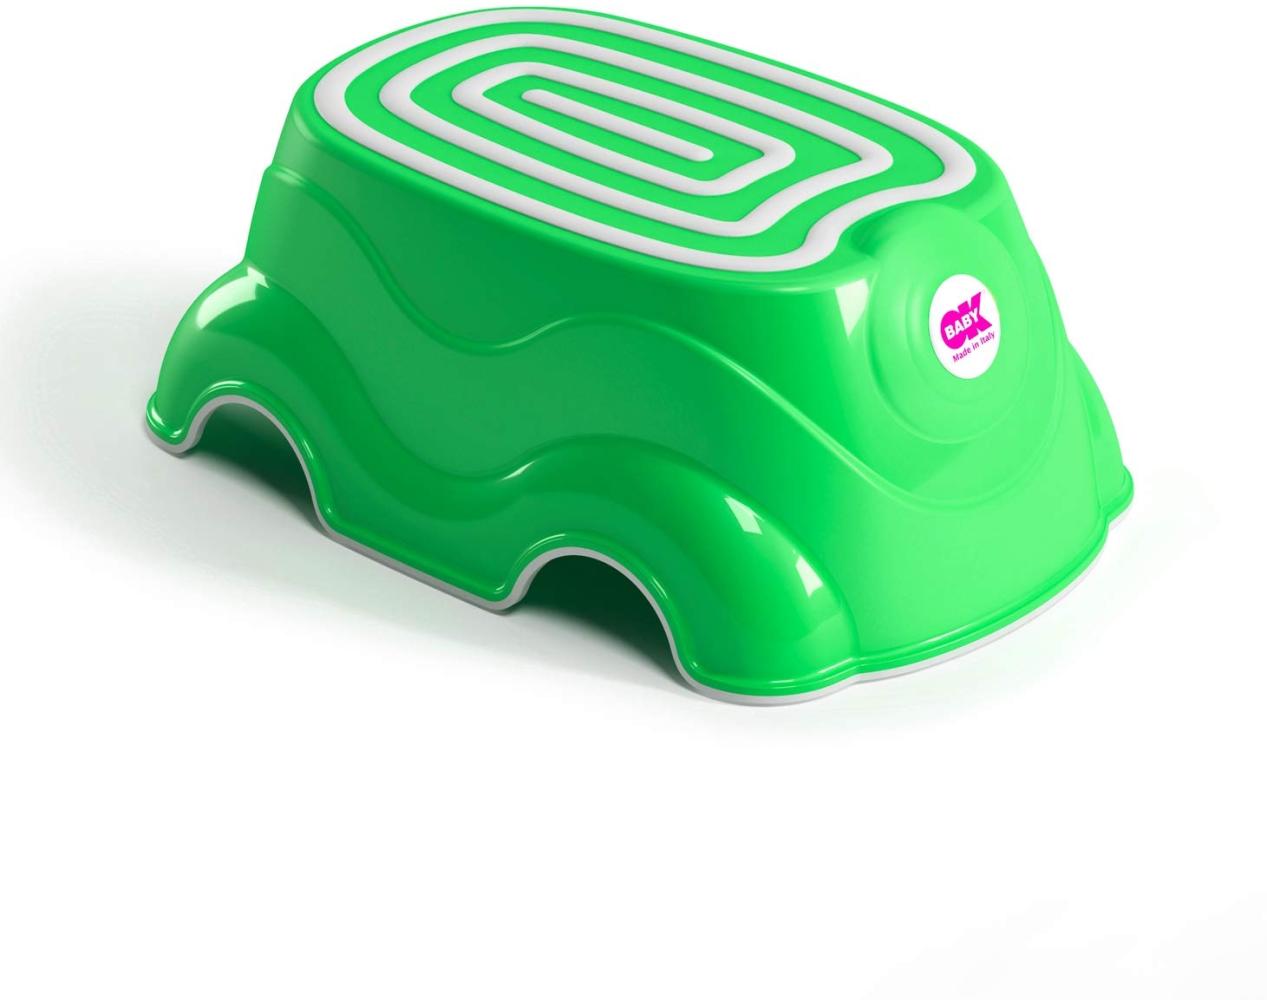 OKBABY Herbie 38204440 - Kindersitzerhöhung mit rutschfestem Gummi - Grün Bild 1